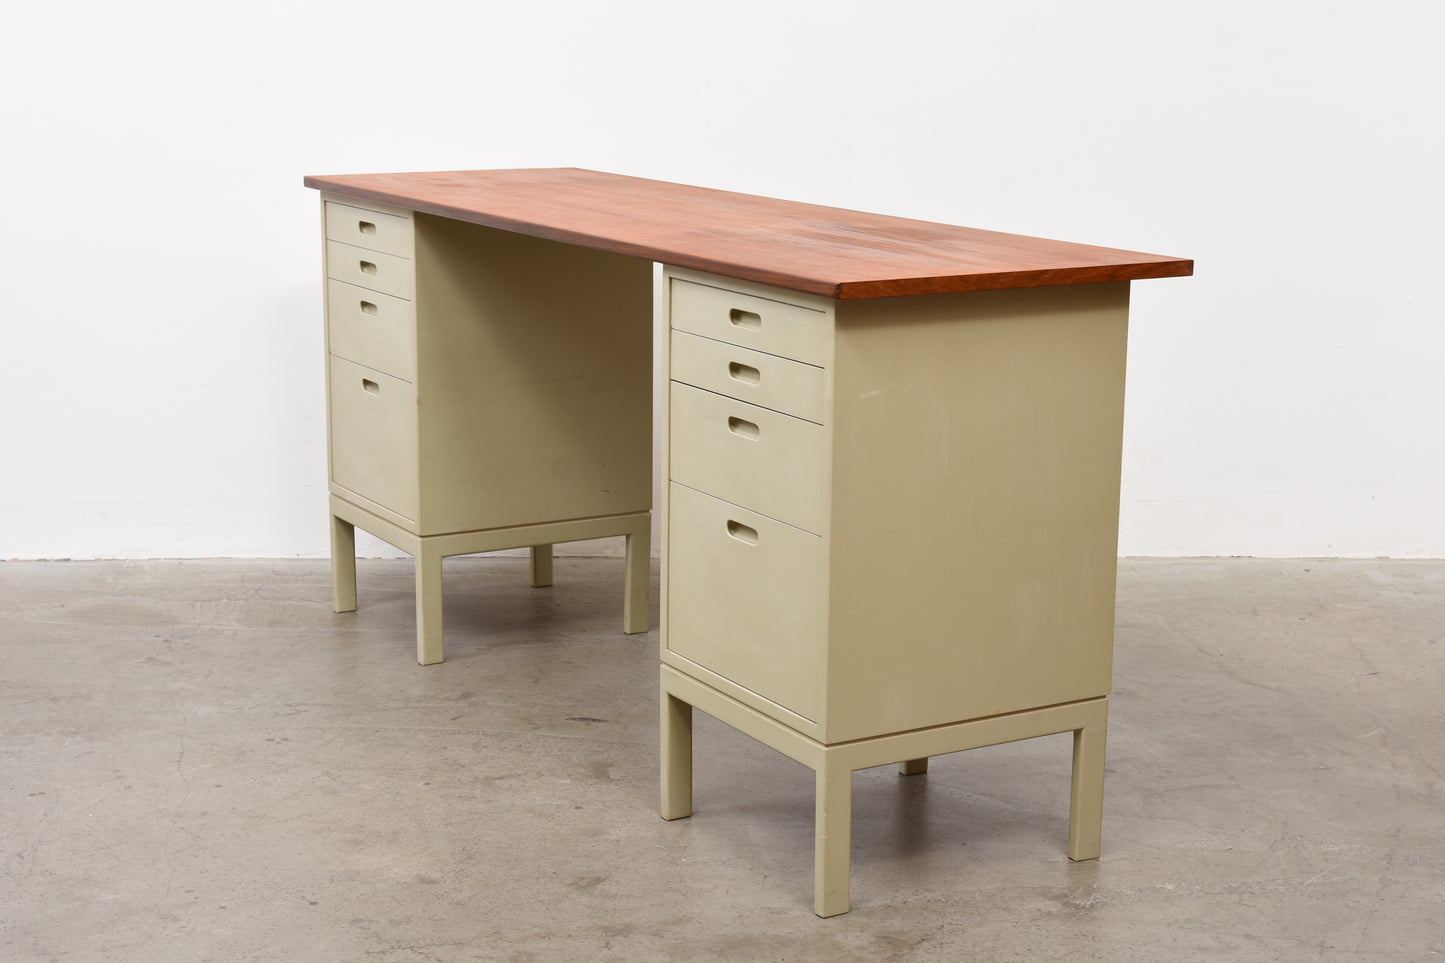 1960s Swedish twin pedestal desk